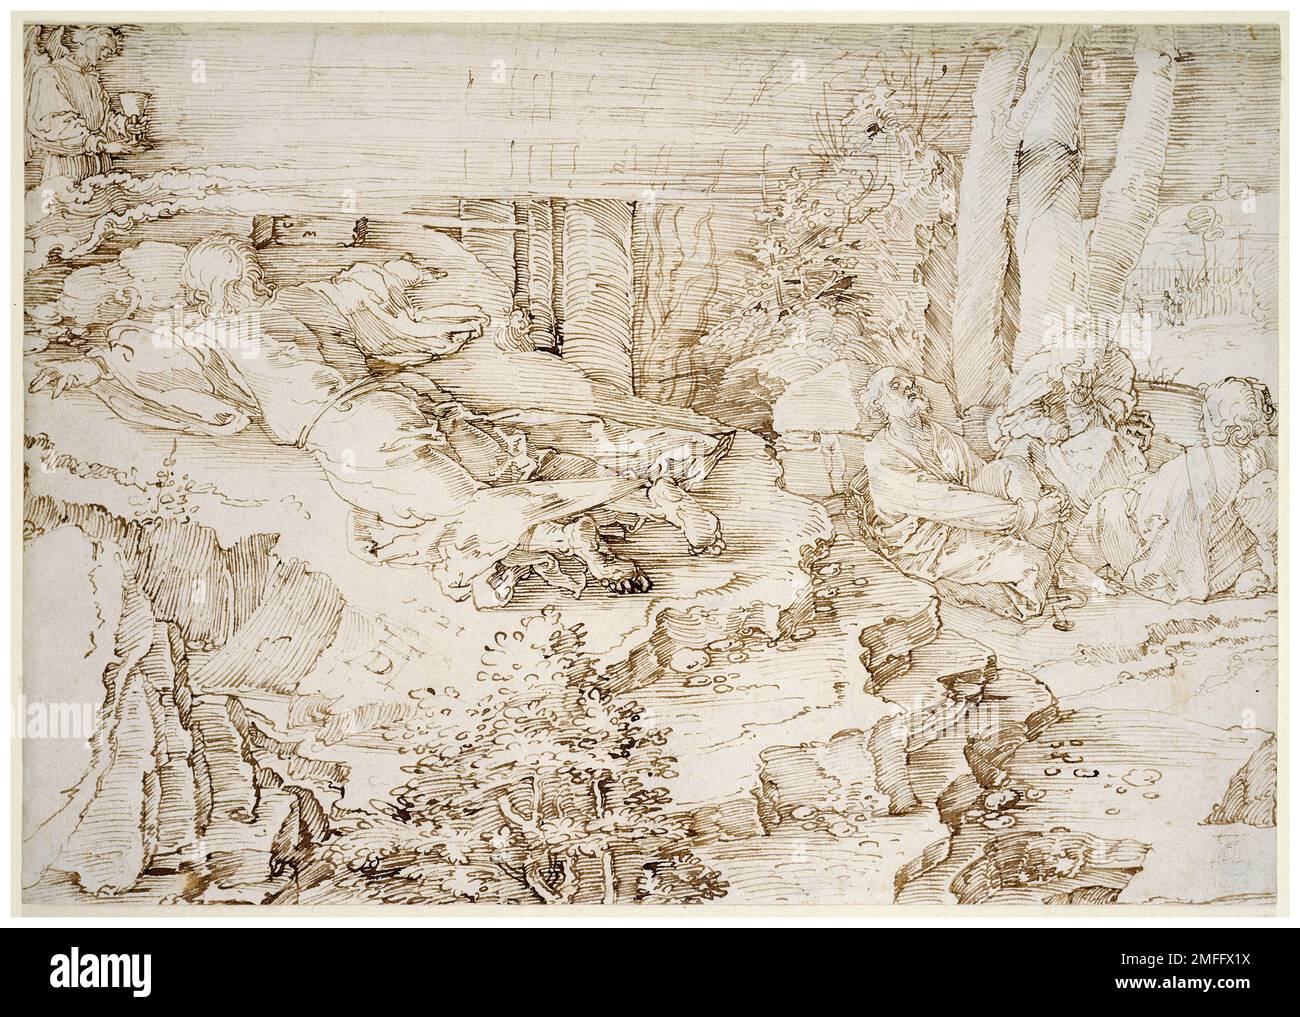 Albrecht Durer, Agony in the Garden, dessin au stylo et à l'encre, 1521 Banque D'Images